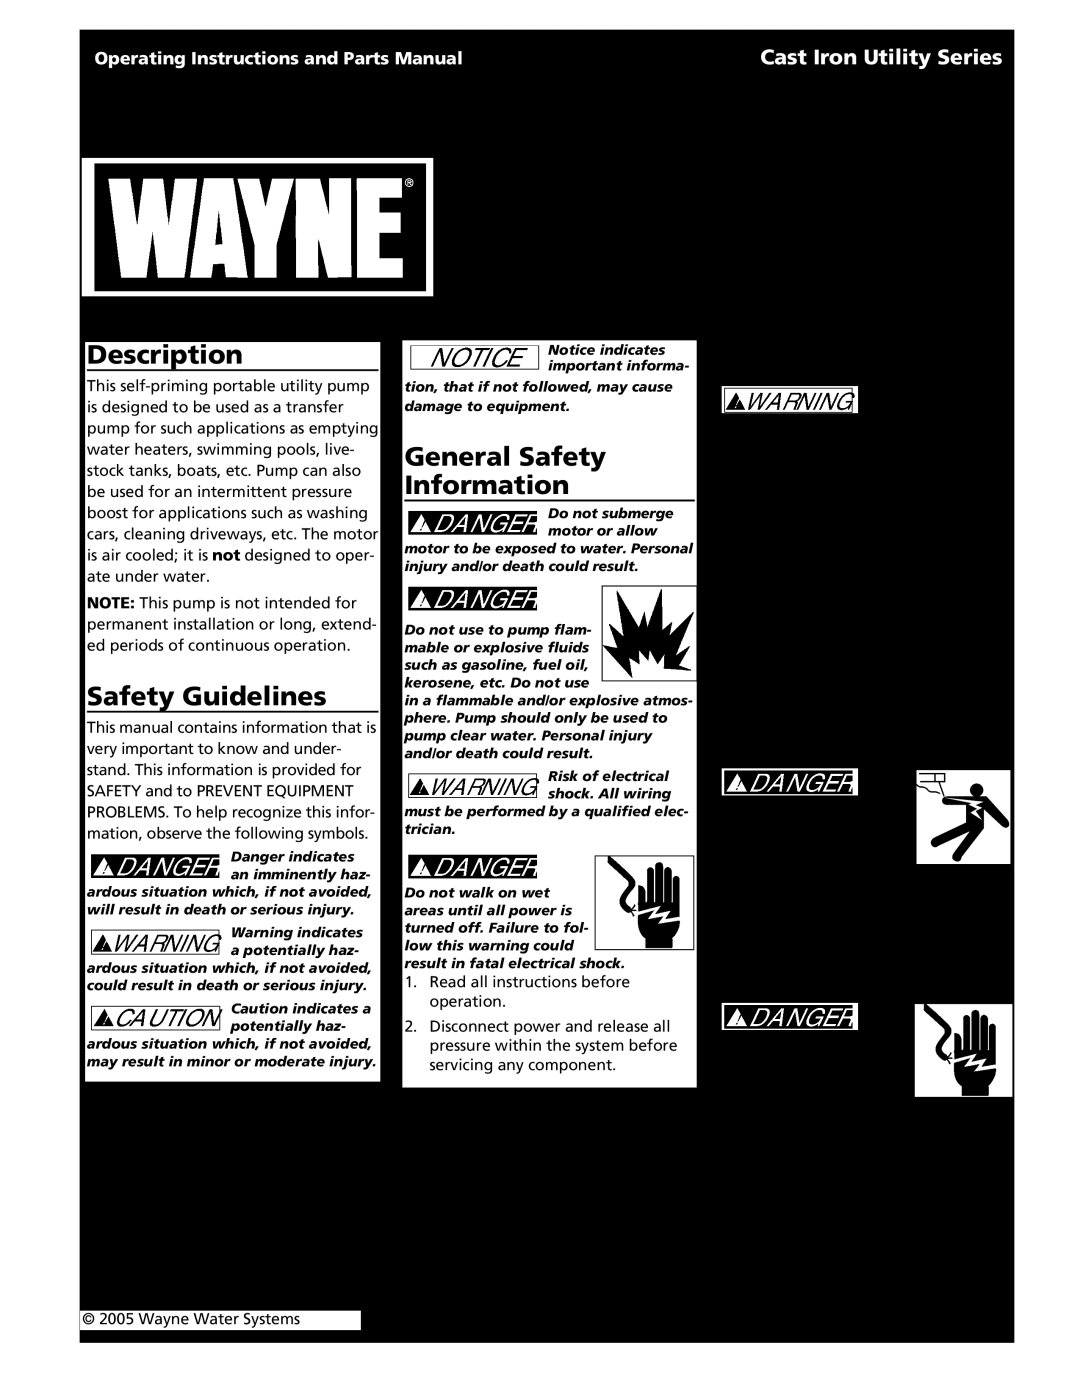 Wayne 321304-001 specifications Description, Safety Guidelines, Specifications, General Safety Information, Installation 